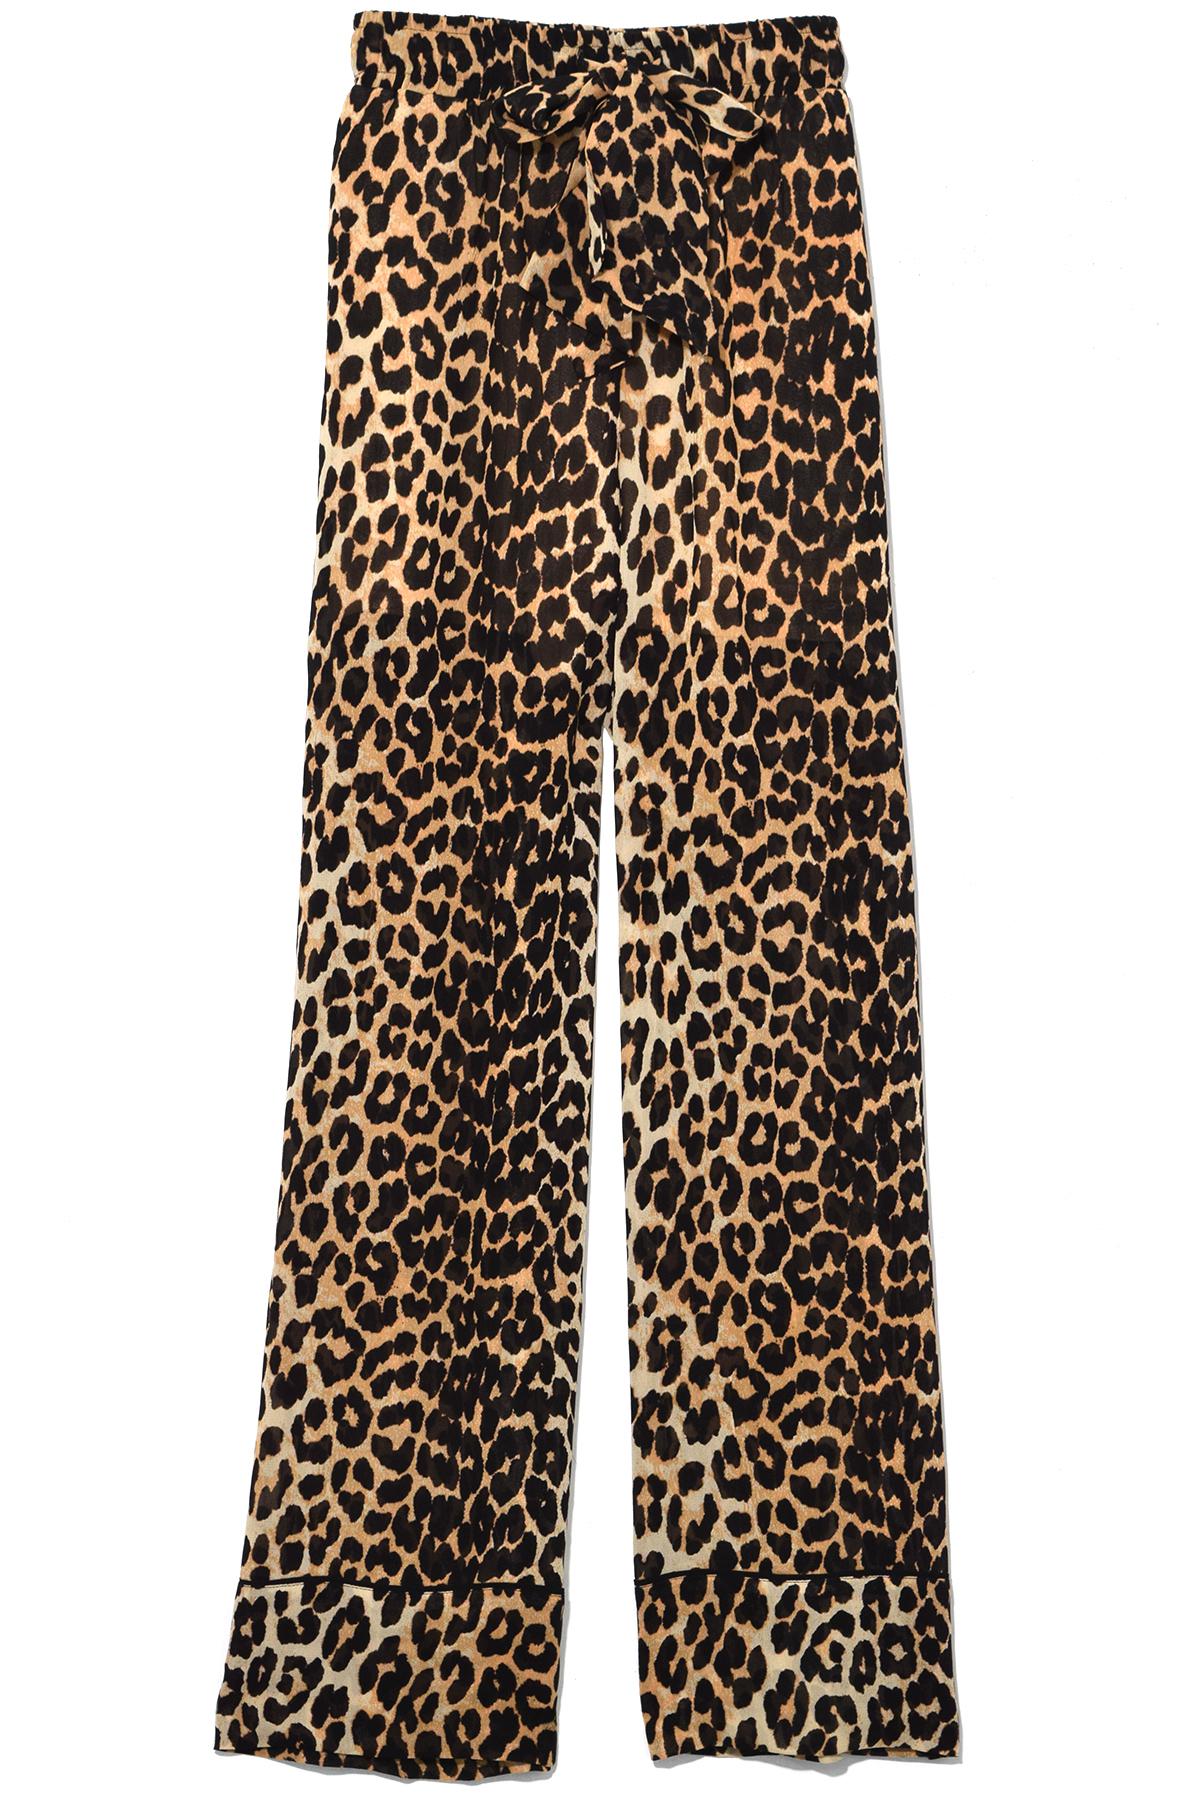 Ganni Synthetic Fairfax Georgette Pants In Leopard - Lyst